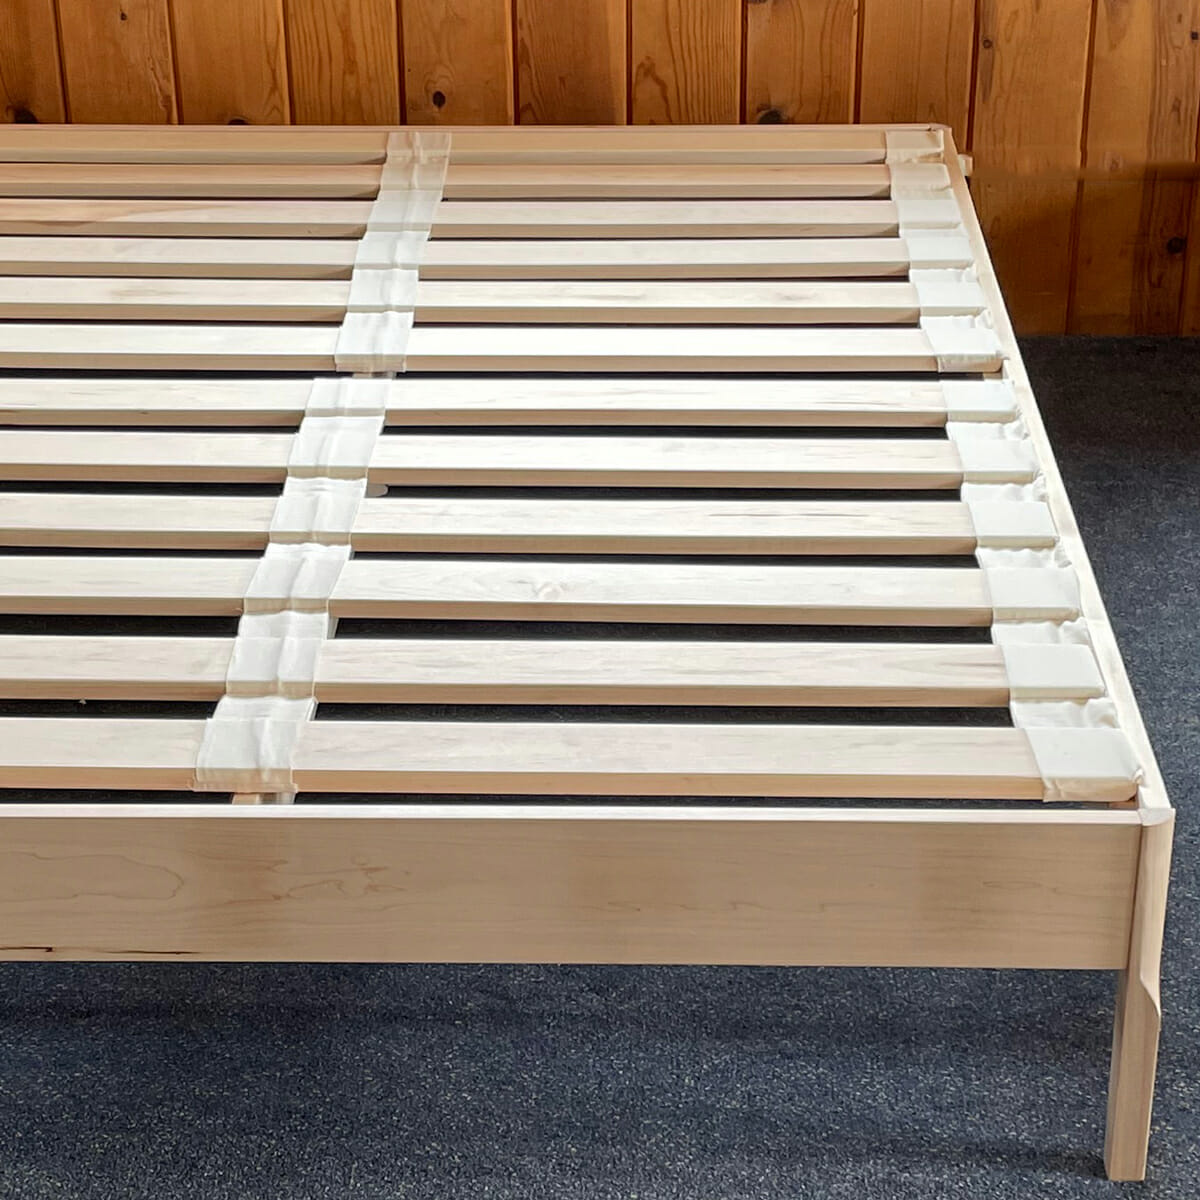 Wood Slat Mattress Foundation Order, Are Wooden Slat Beds Good